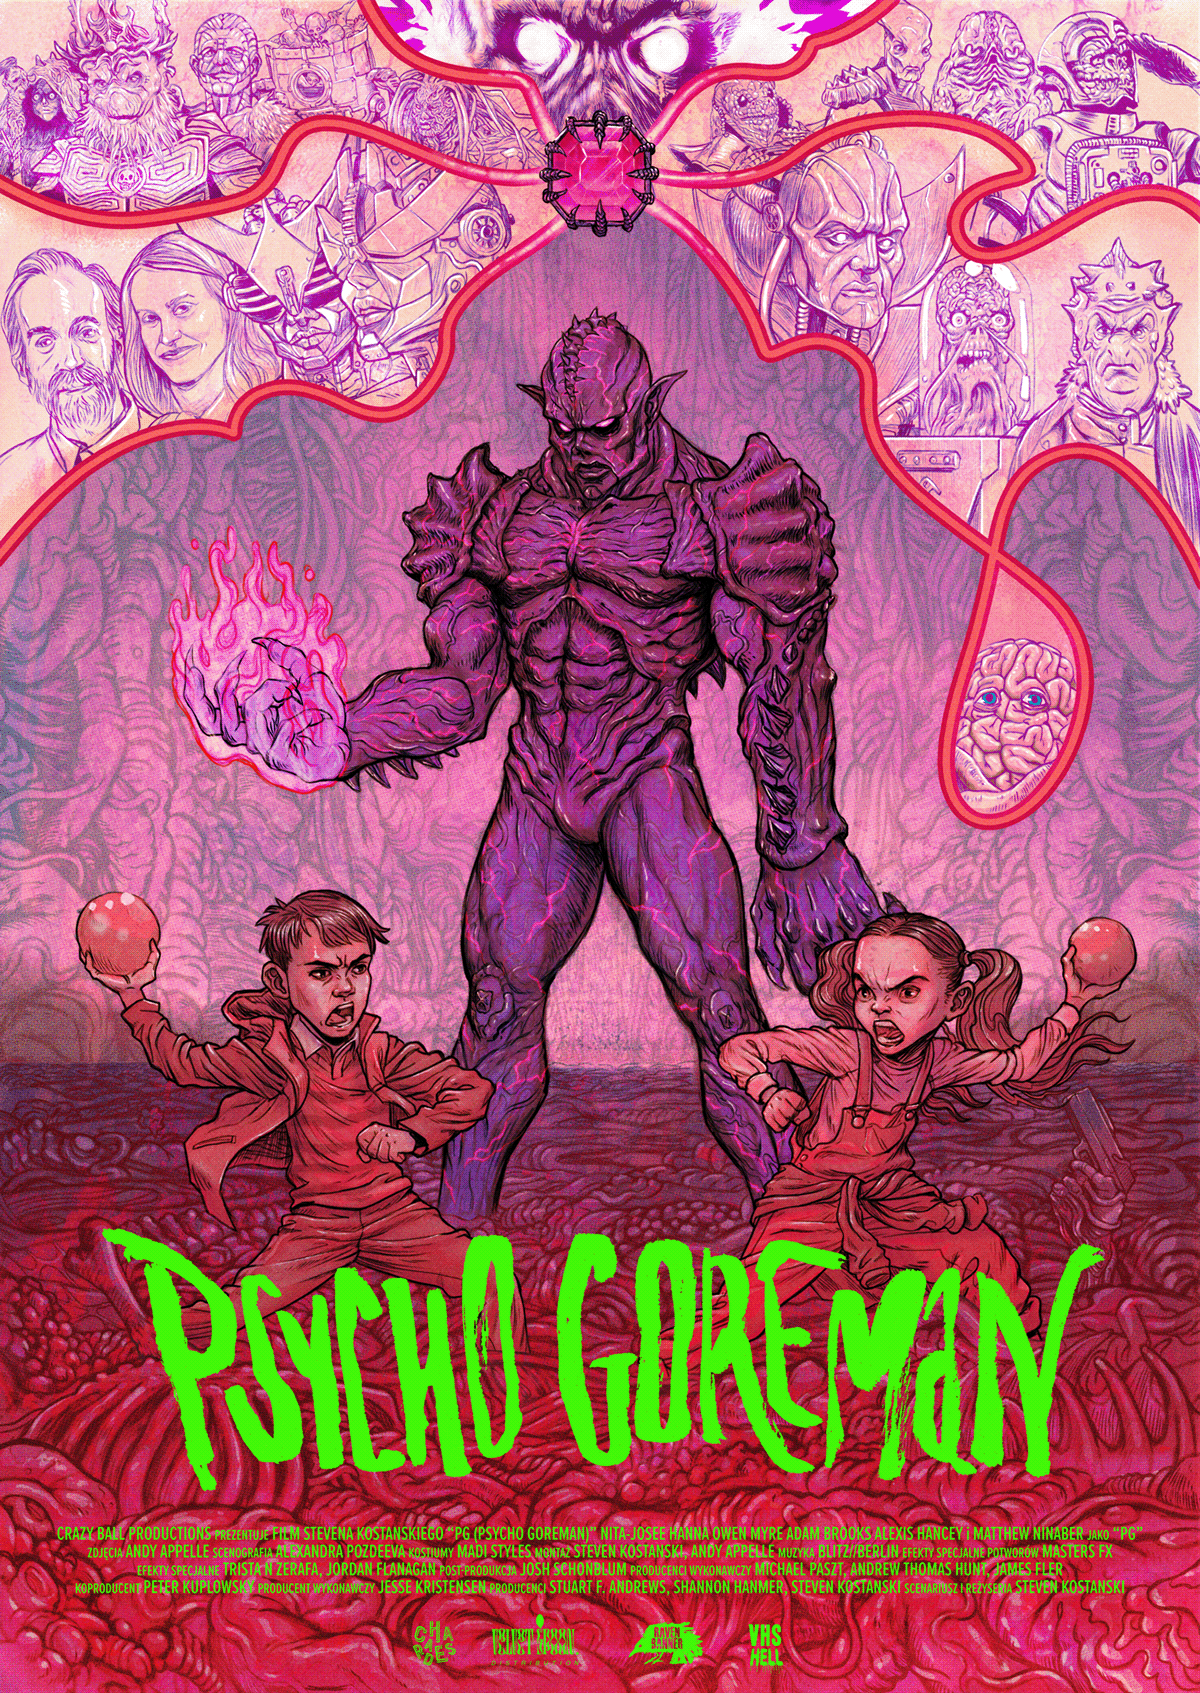 Digital Art  Drawing  graphic design  horror Illustation movie poster poster psycho goreman psychogoreman sci-fi